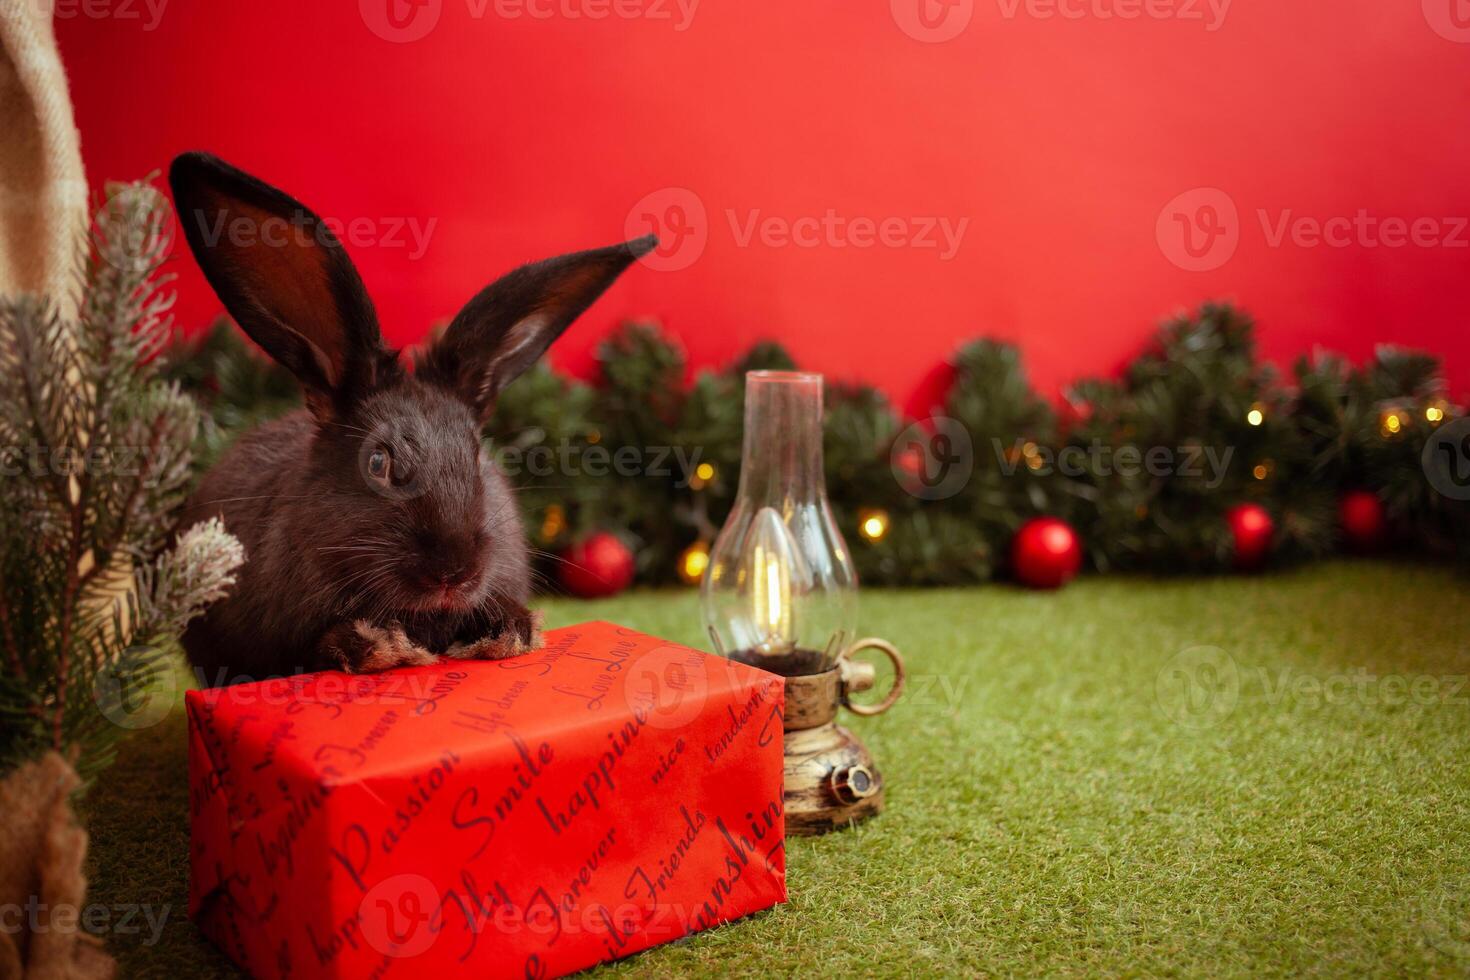 zwart konijn symbool 2023 Chinese kalender, nieuw jaar groet, Kerstmis kaart, kopiëren ruimte voor tekst, rood achtergrond. mooi haas Aan banier, versierd Kerstmis boom. lamp. foto